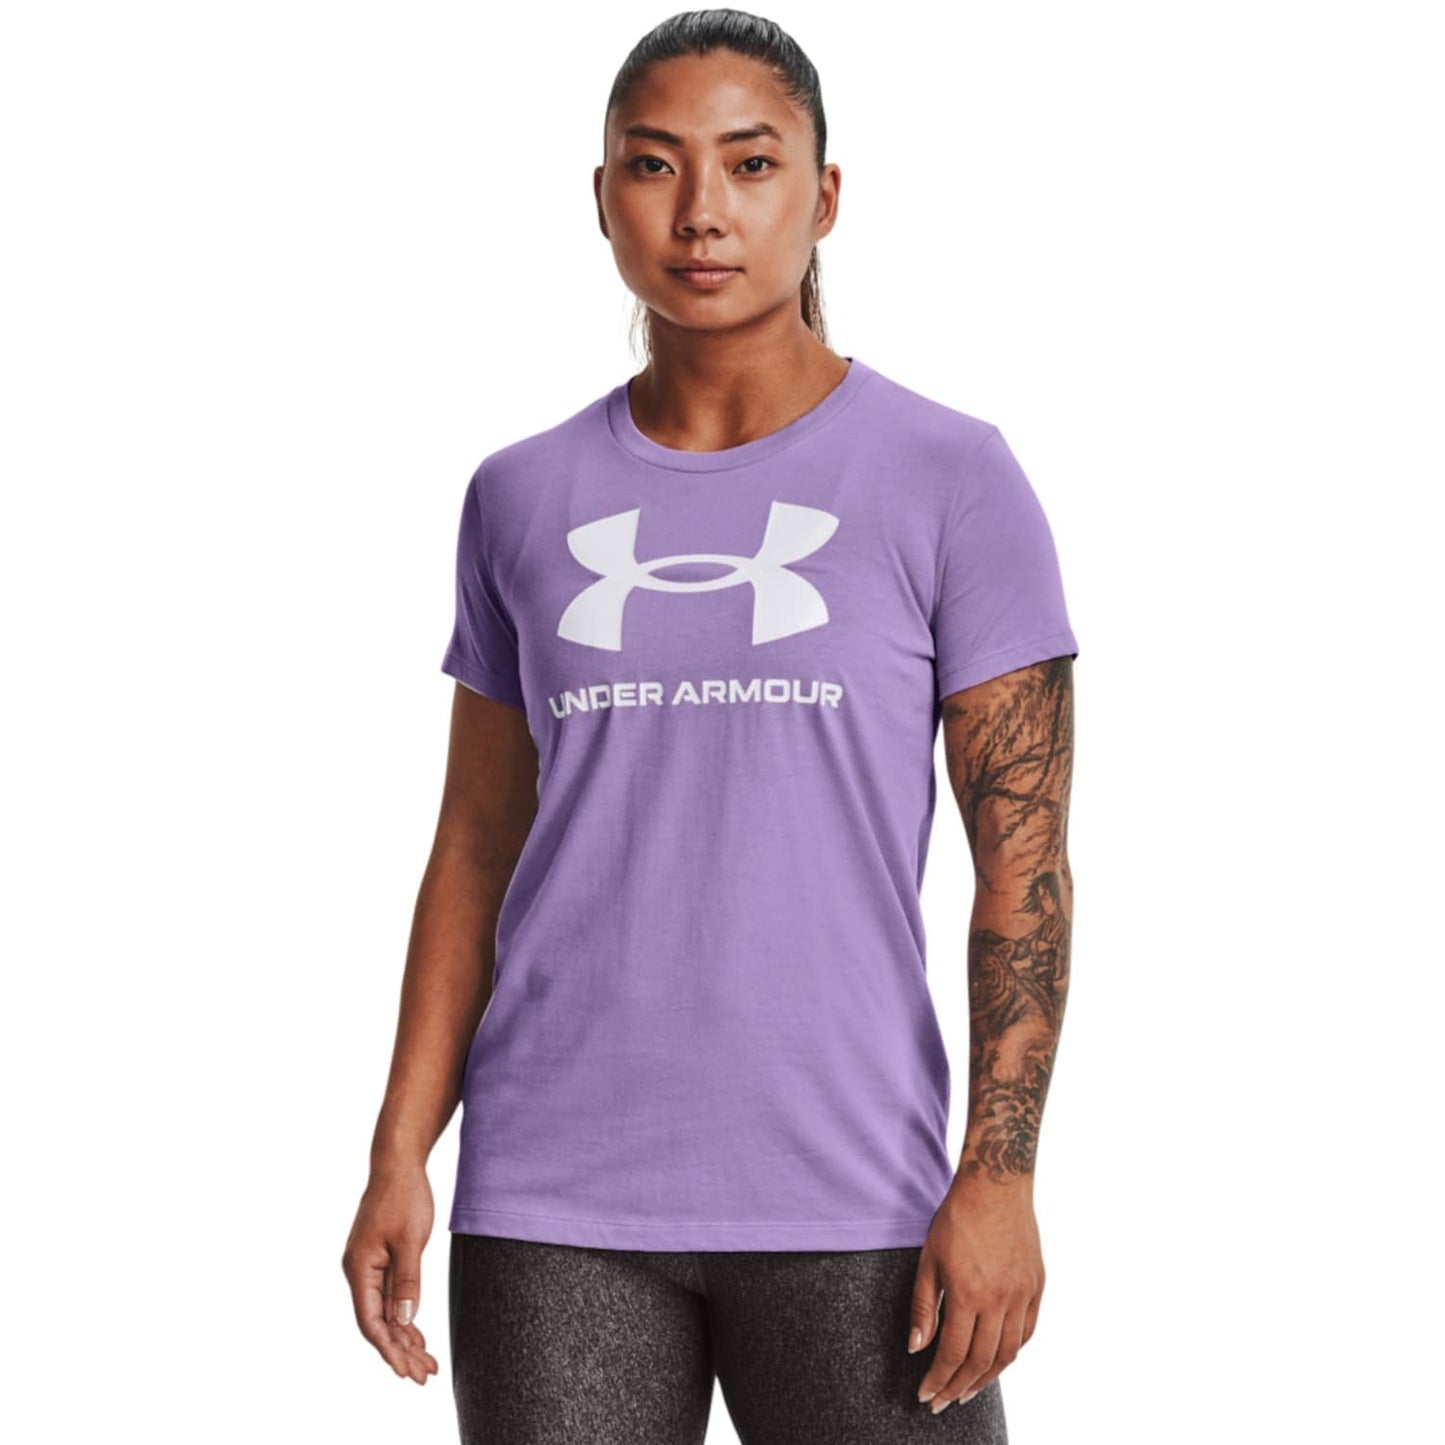 Under Armour Women's Live Sportstyle Graphic SSC T-Shirt